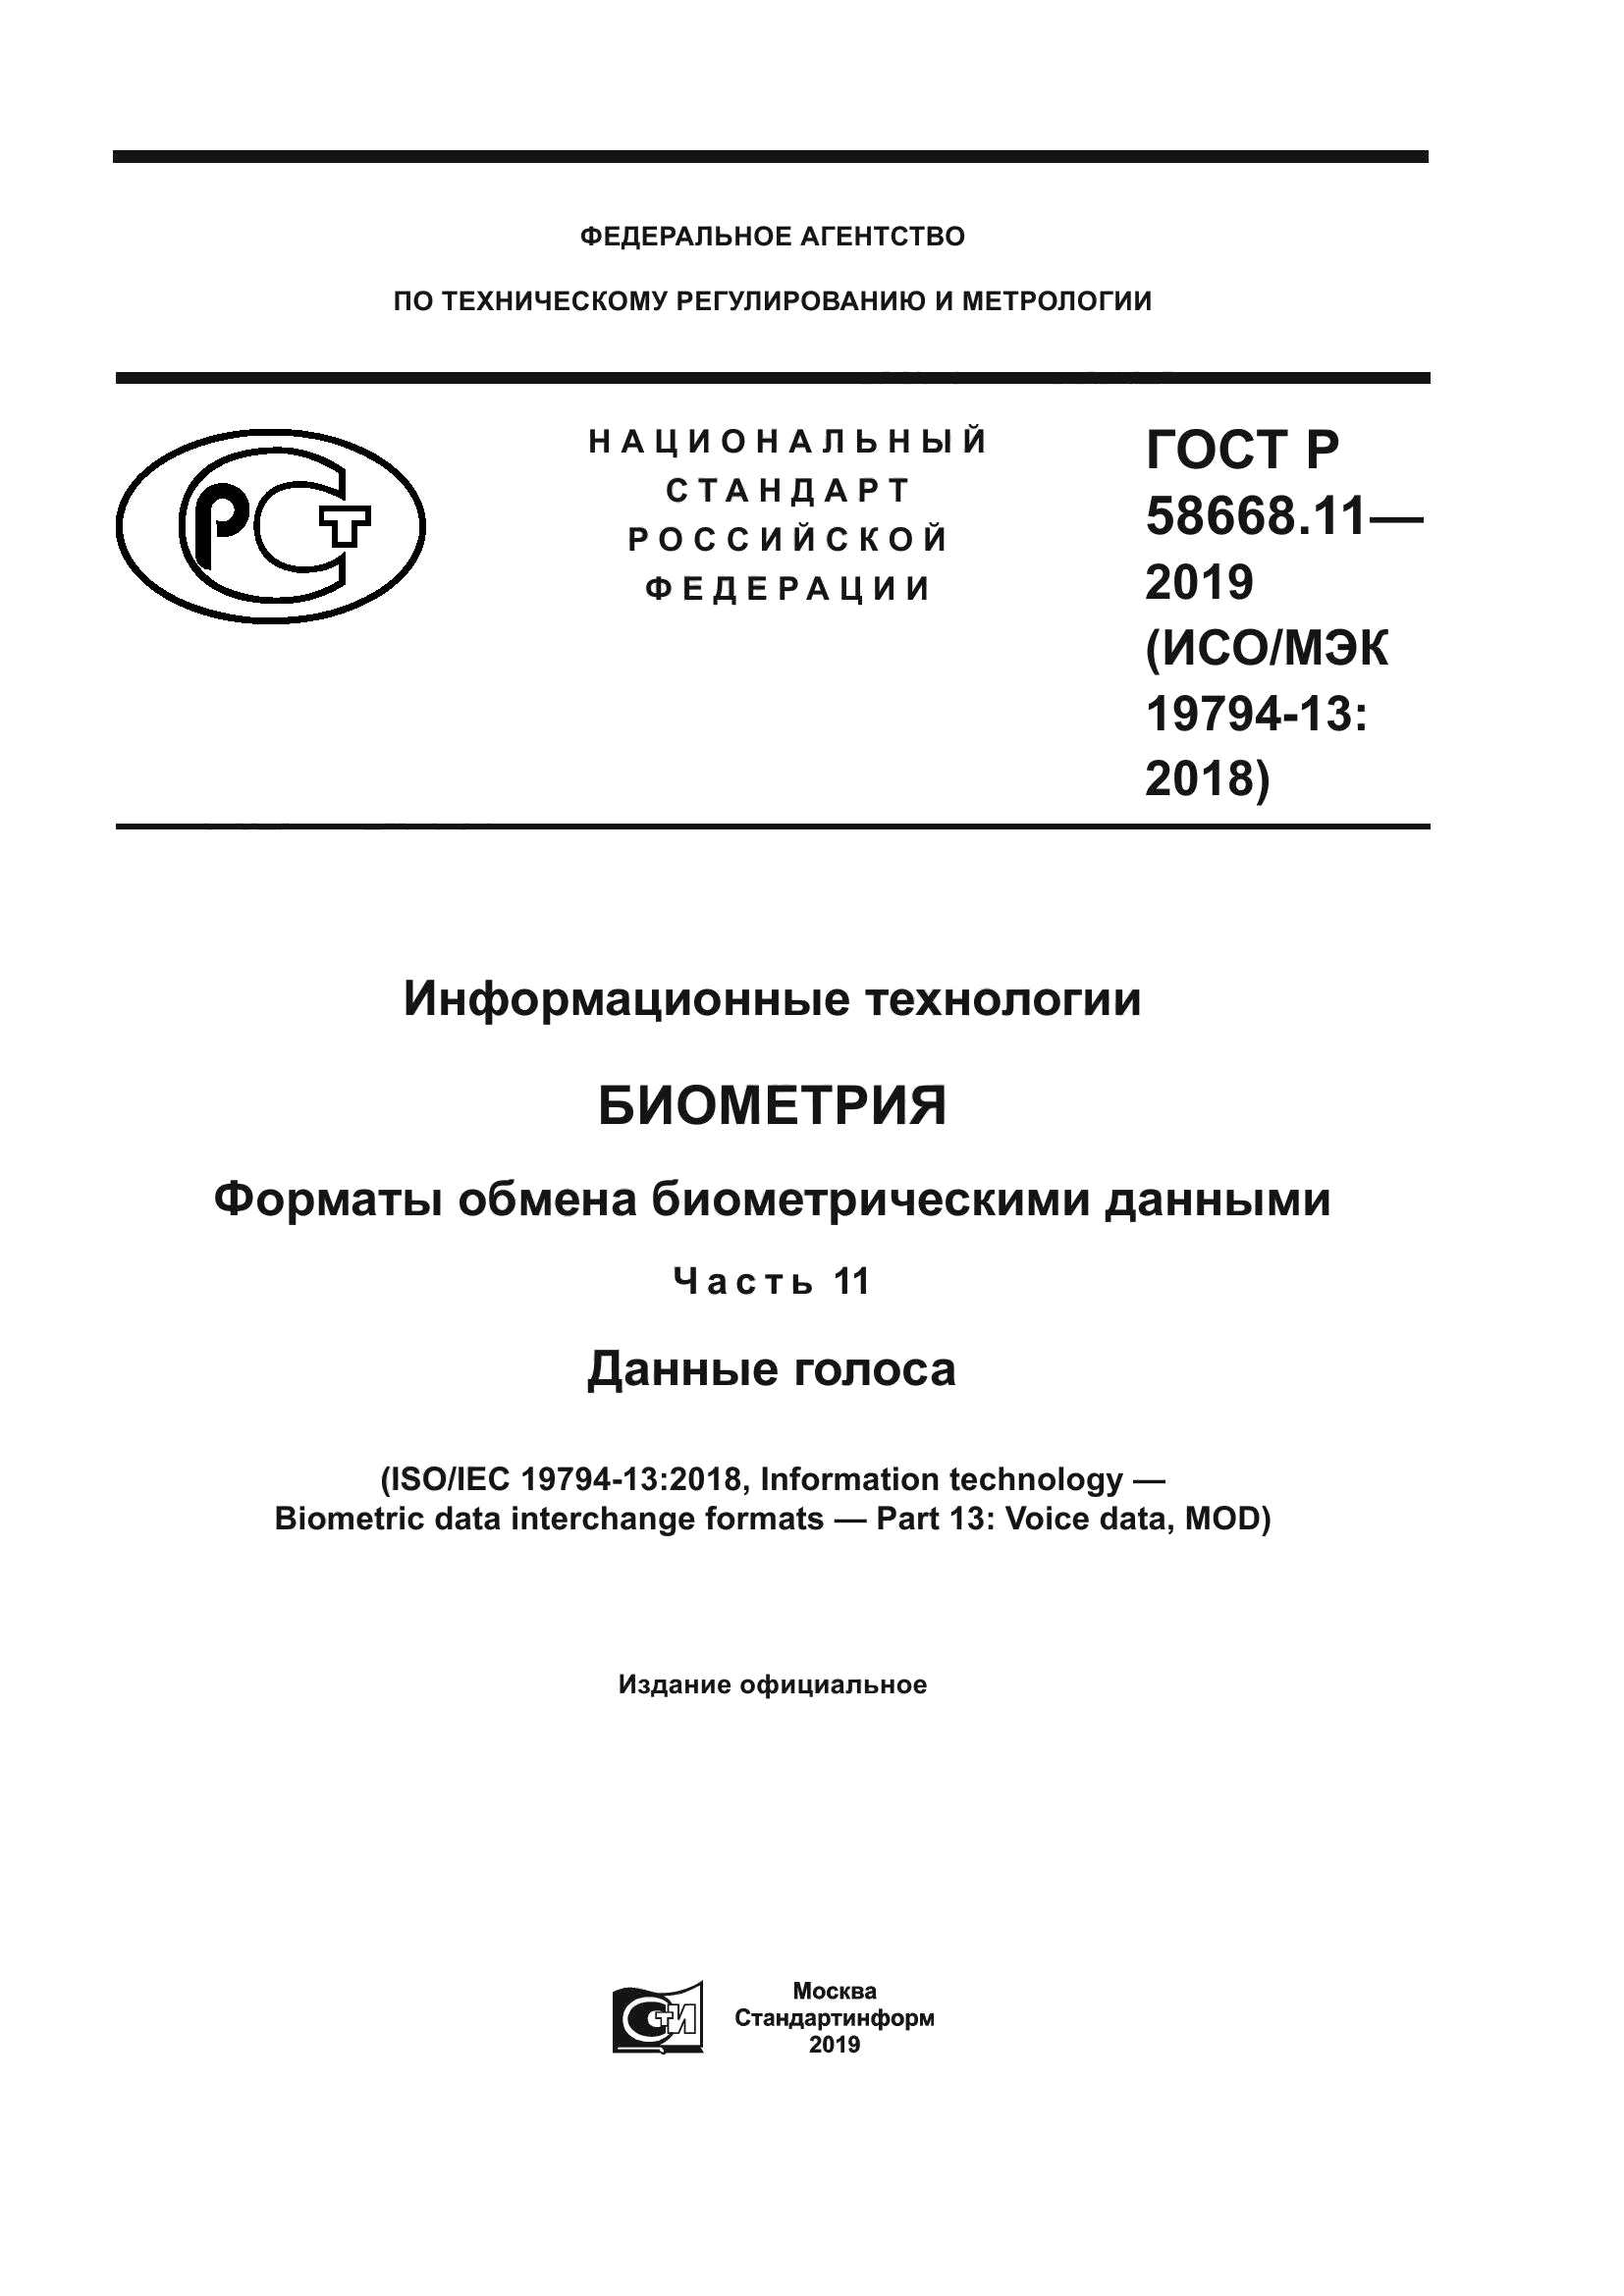 ГОСТ Р 58668.11-2019